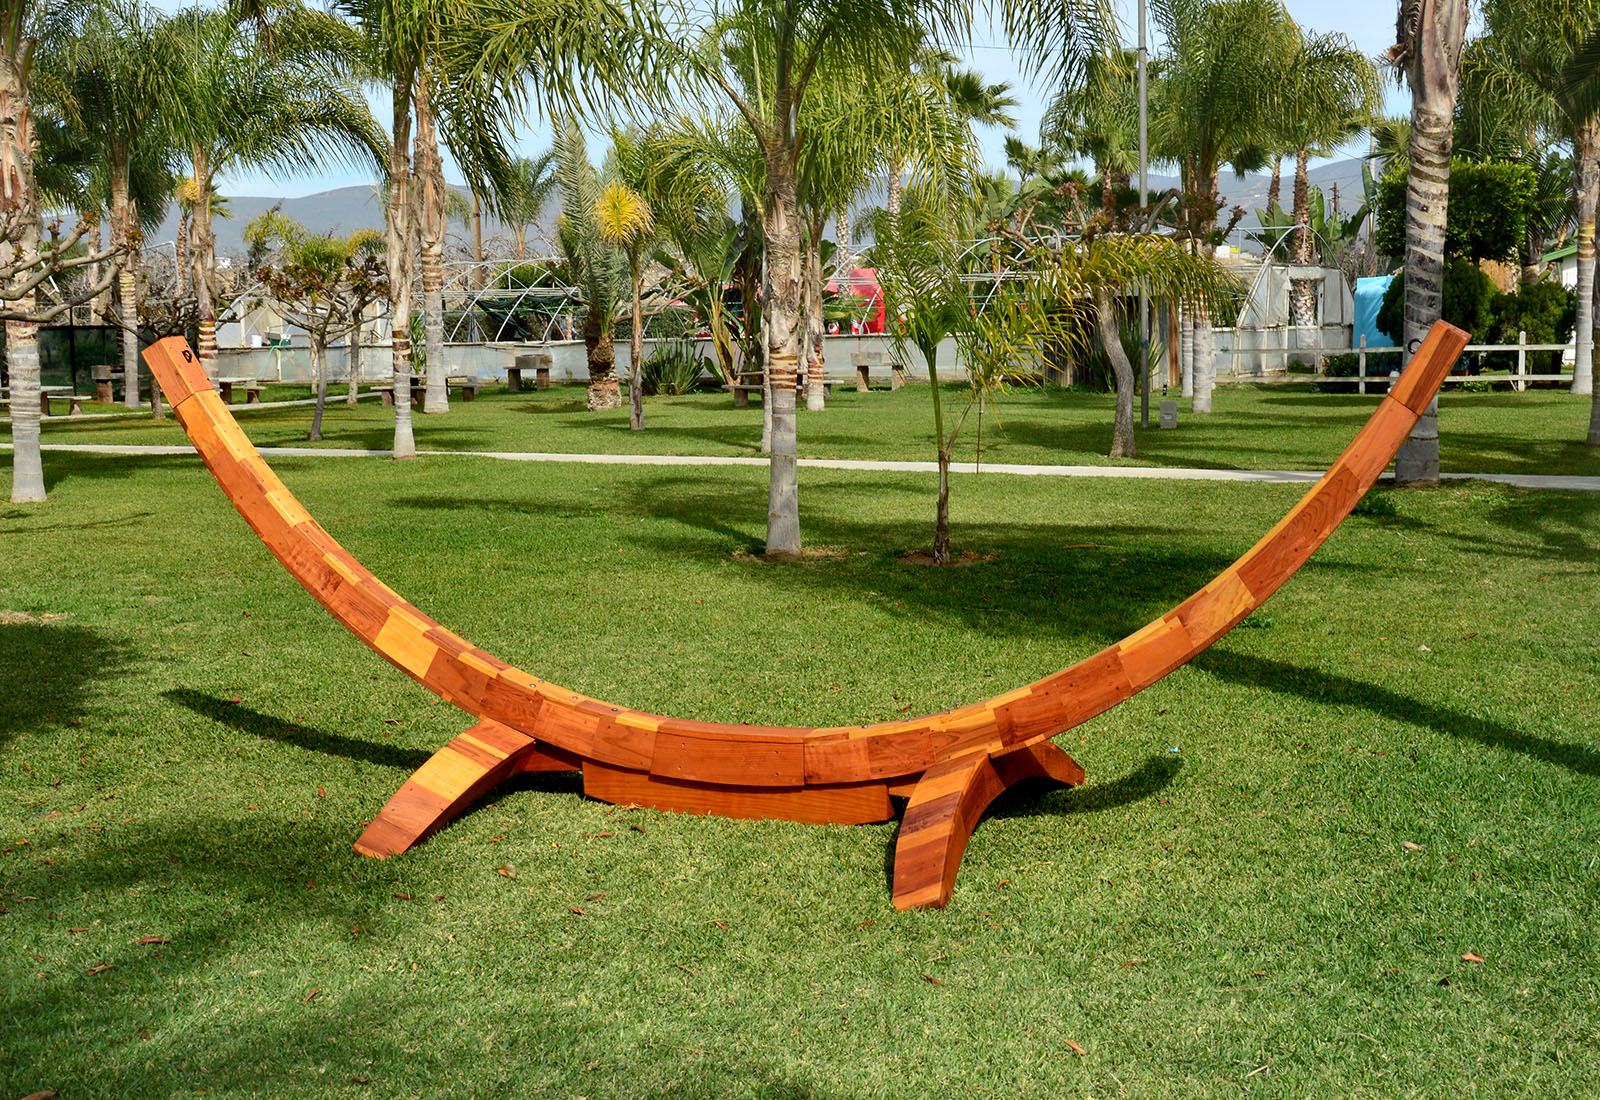 shorea wood arc hammock stand